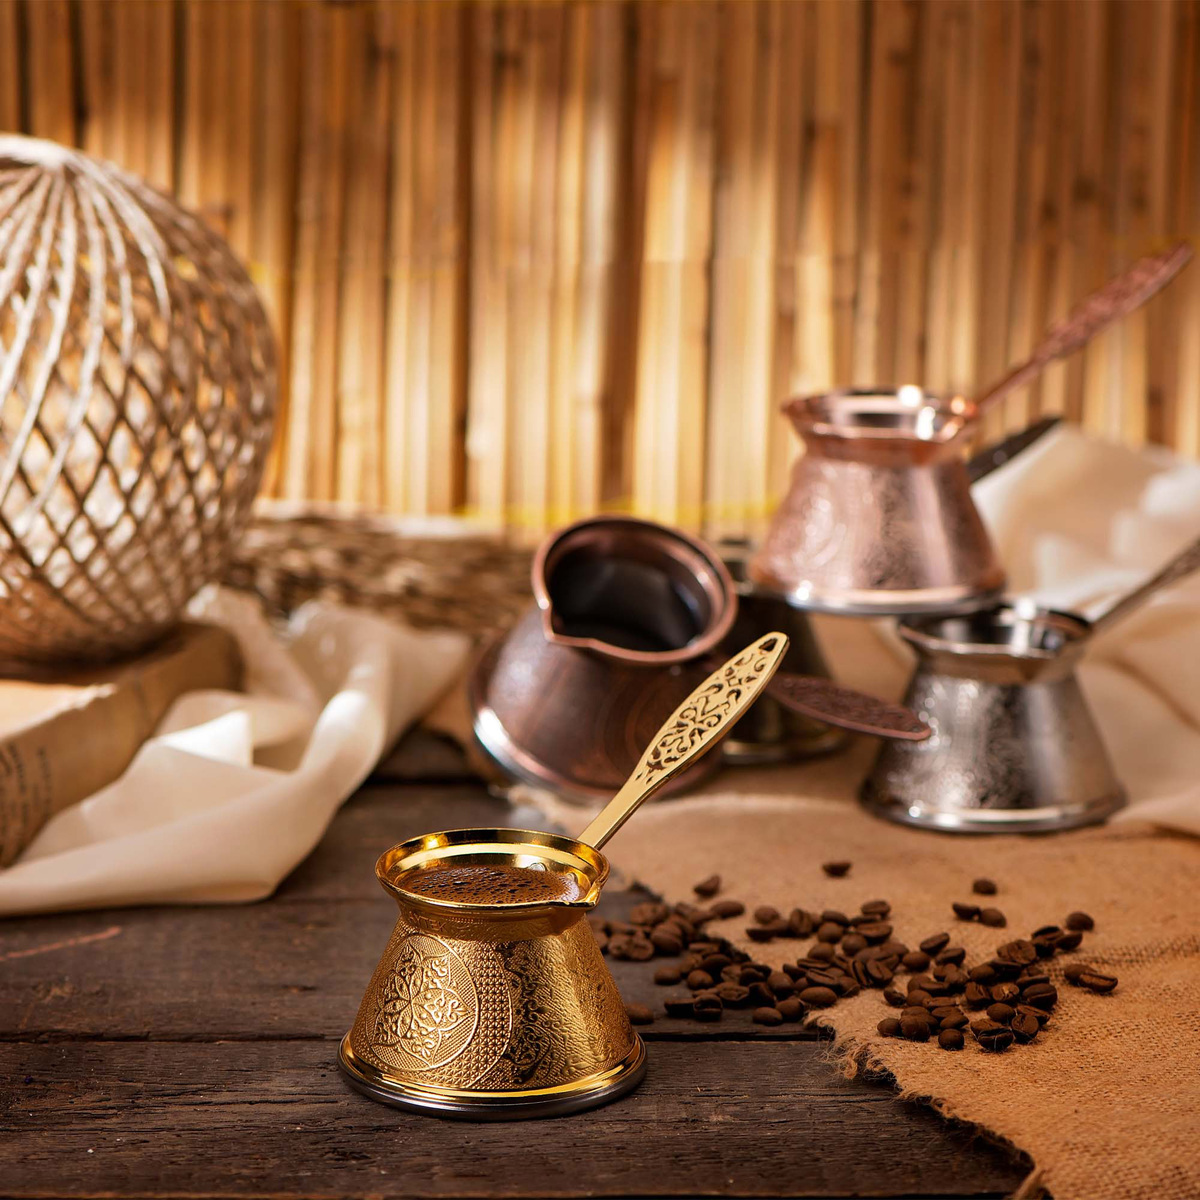 Aytek Bronze Coffee Pot, HLN-2